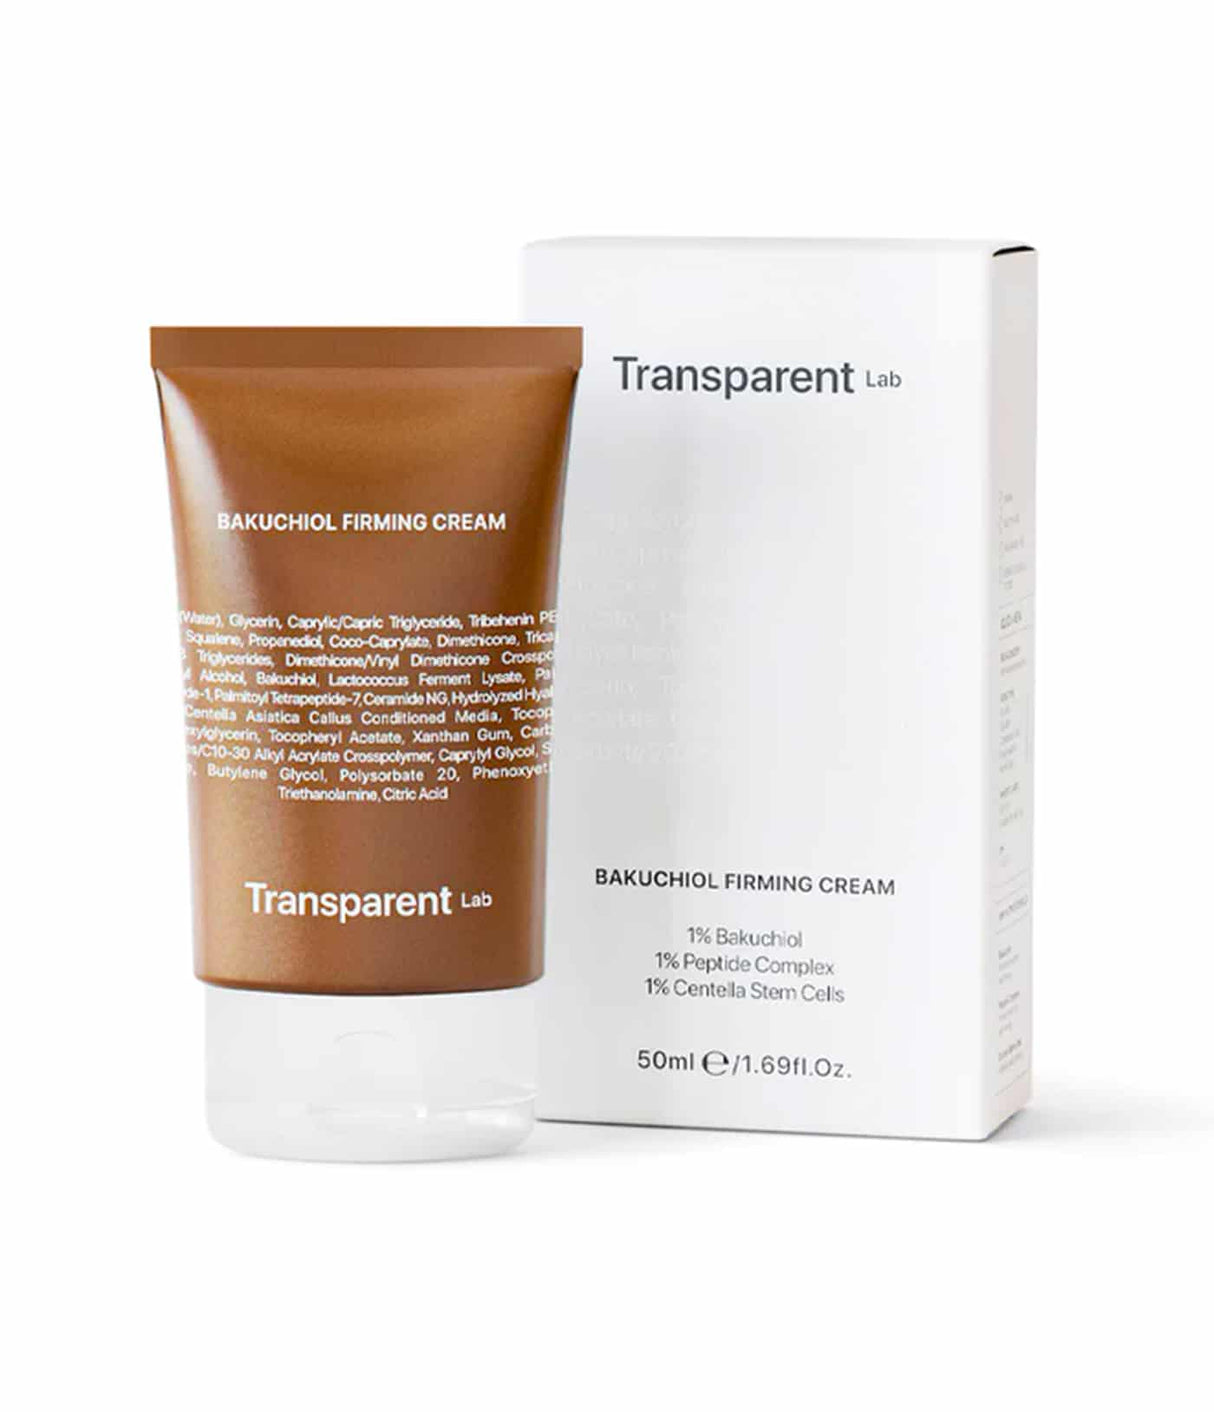 Bakuchiol Firming Cream de Transparent Lab